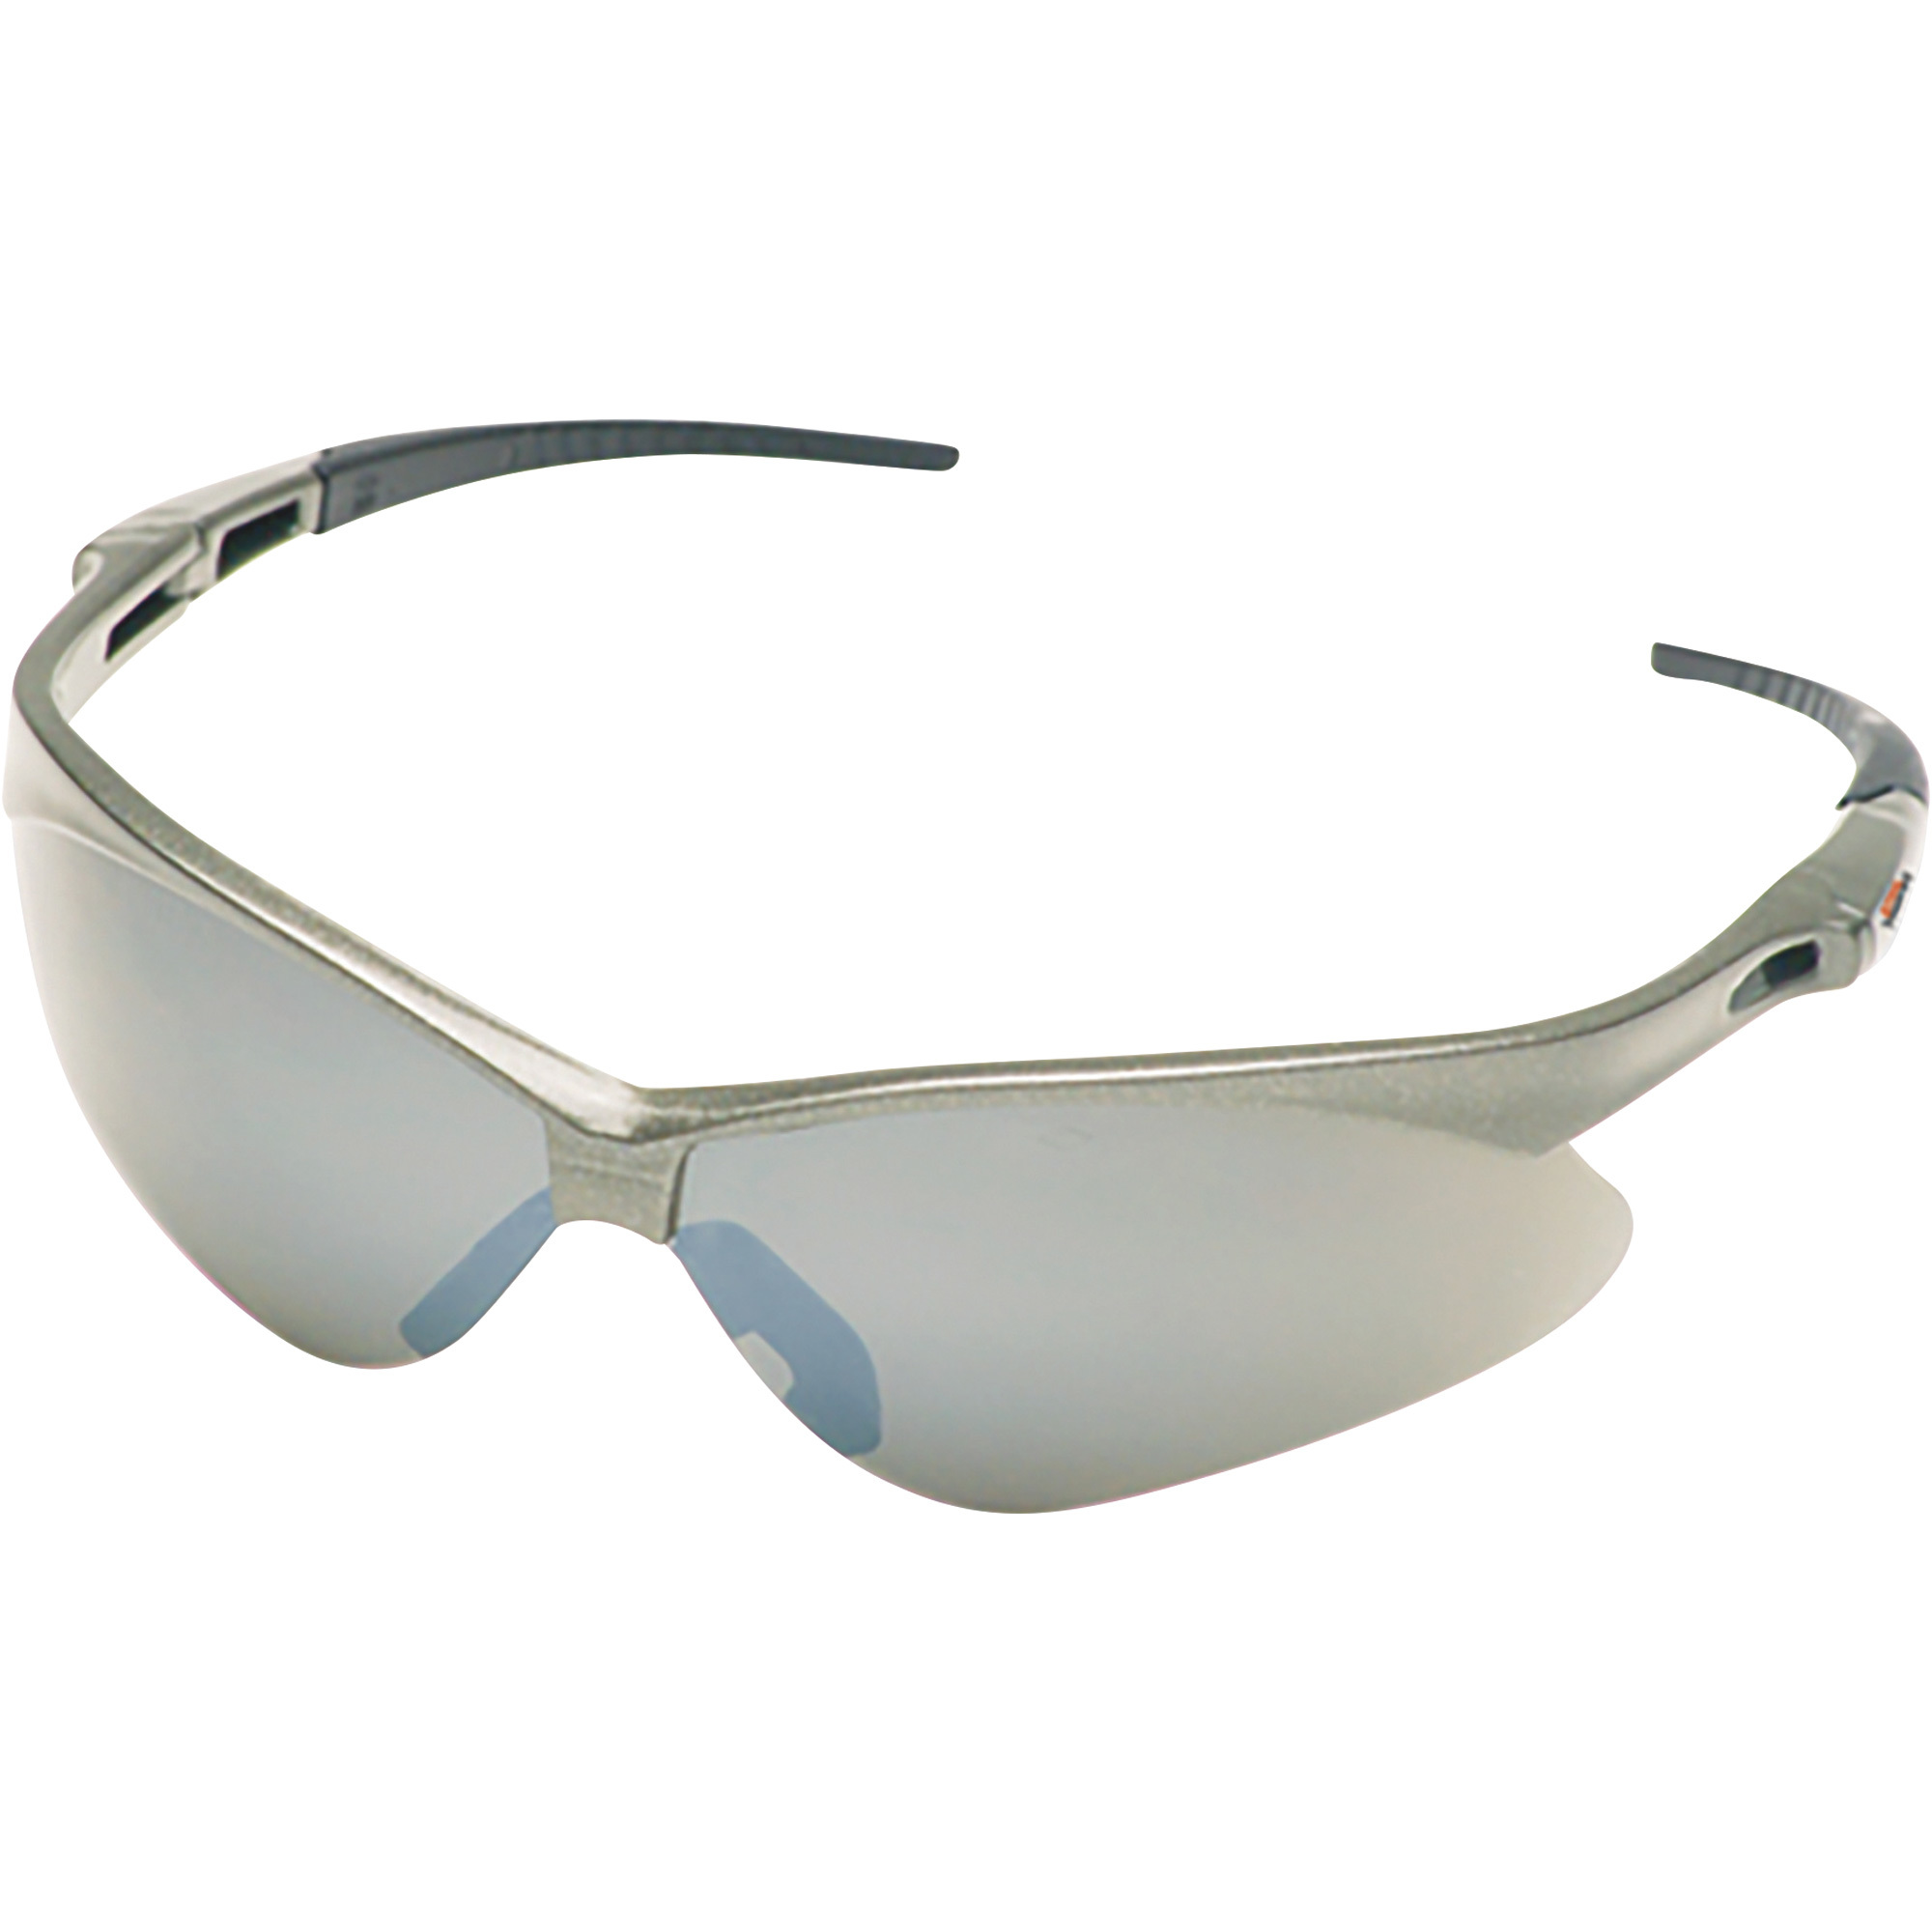 STIHL Timbersports Protective Safety Glasses â Smoked Mirror Polycarbonate Lenses, Model 7010 884 0316